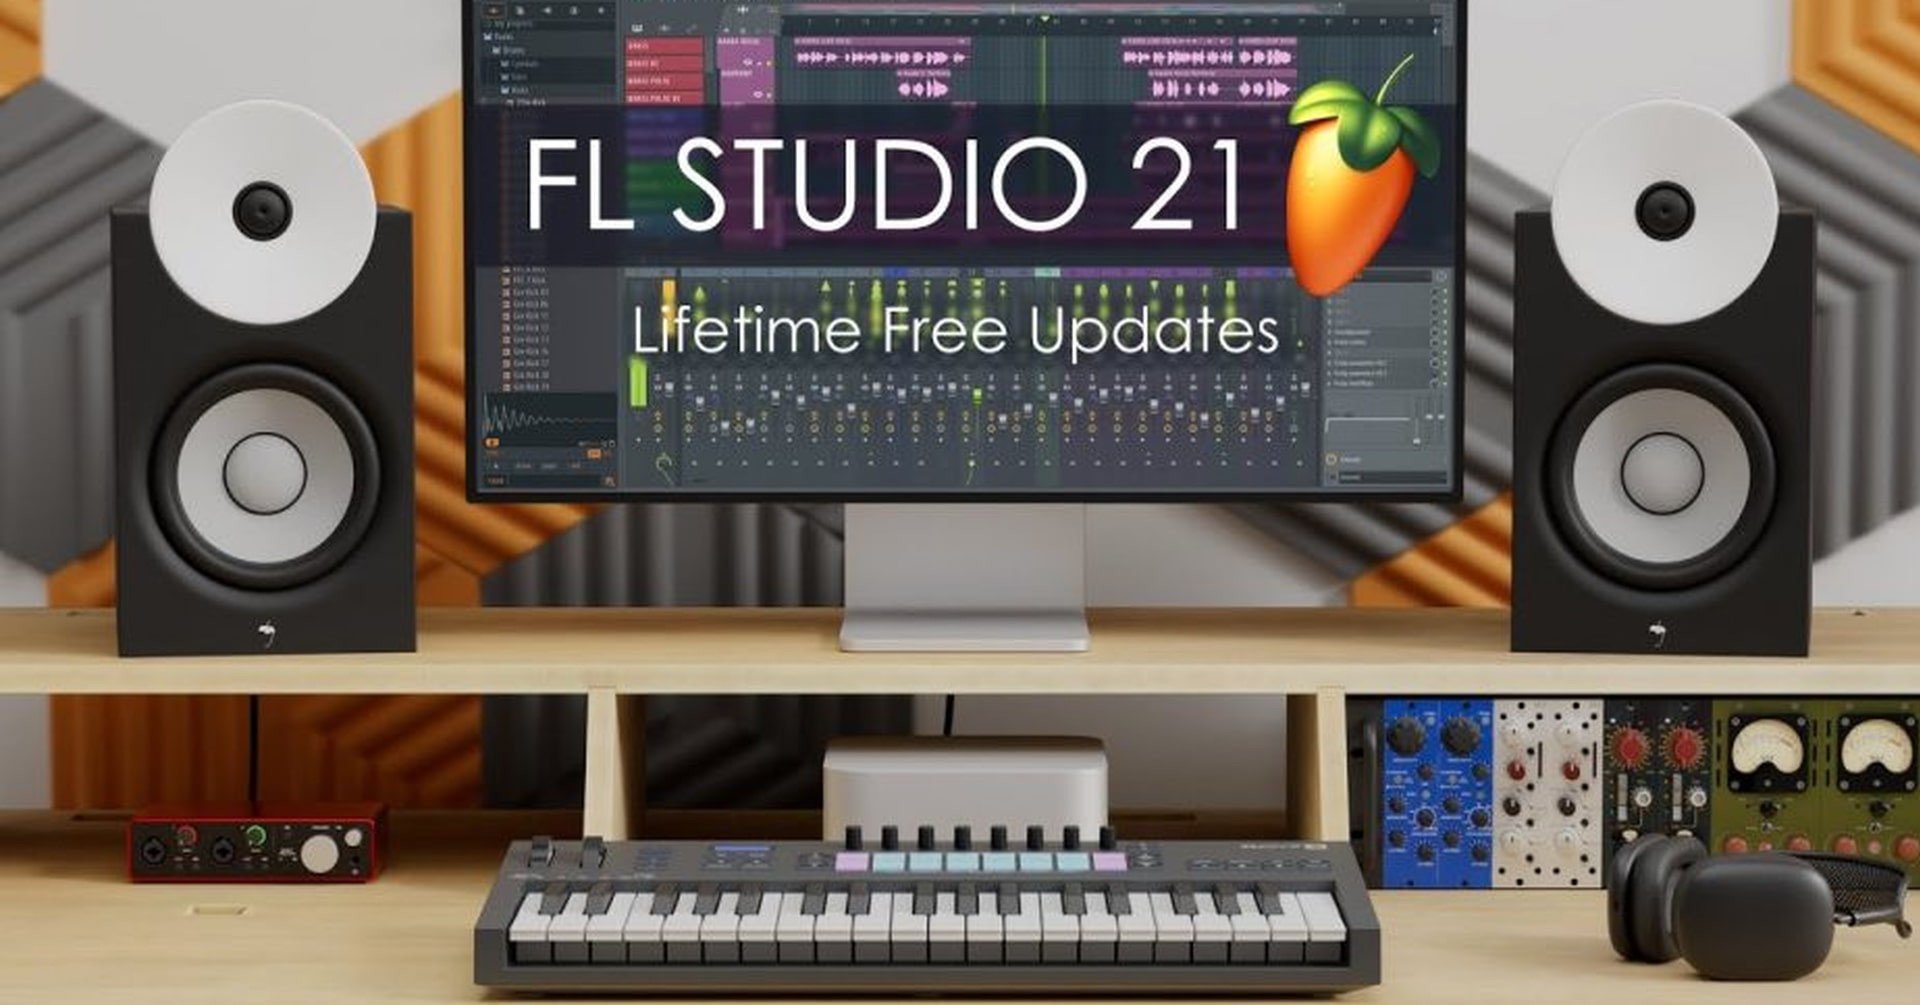 FL STUDIO 21 już dostępne!